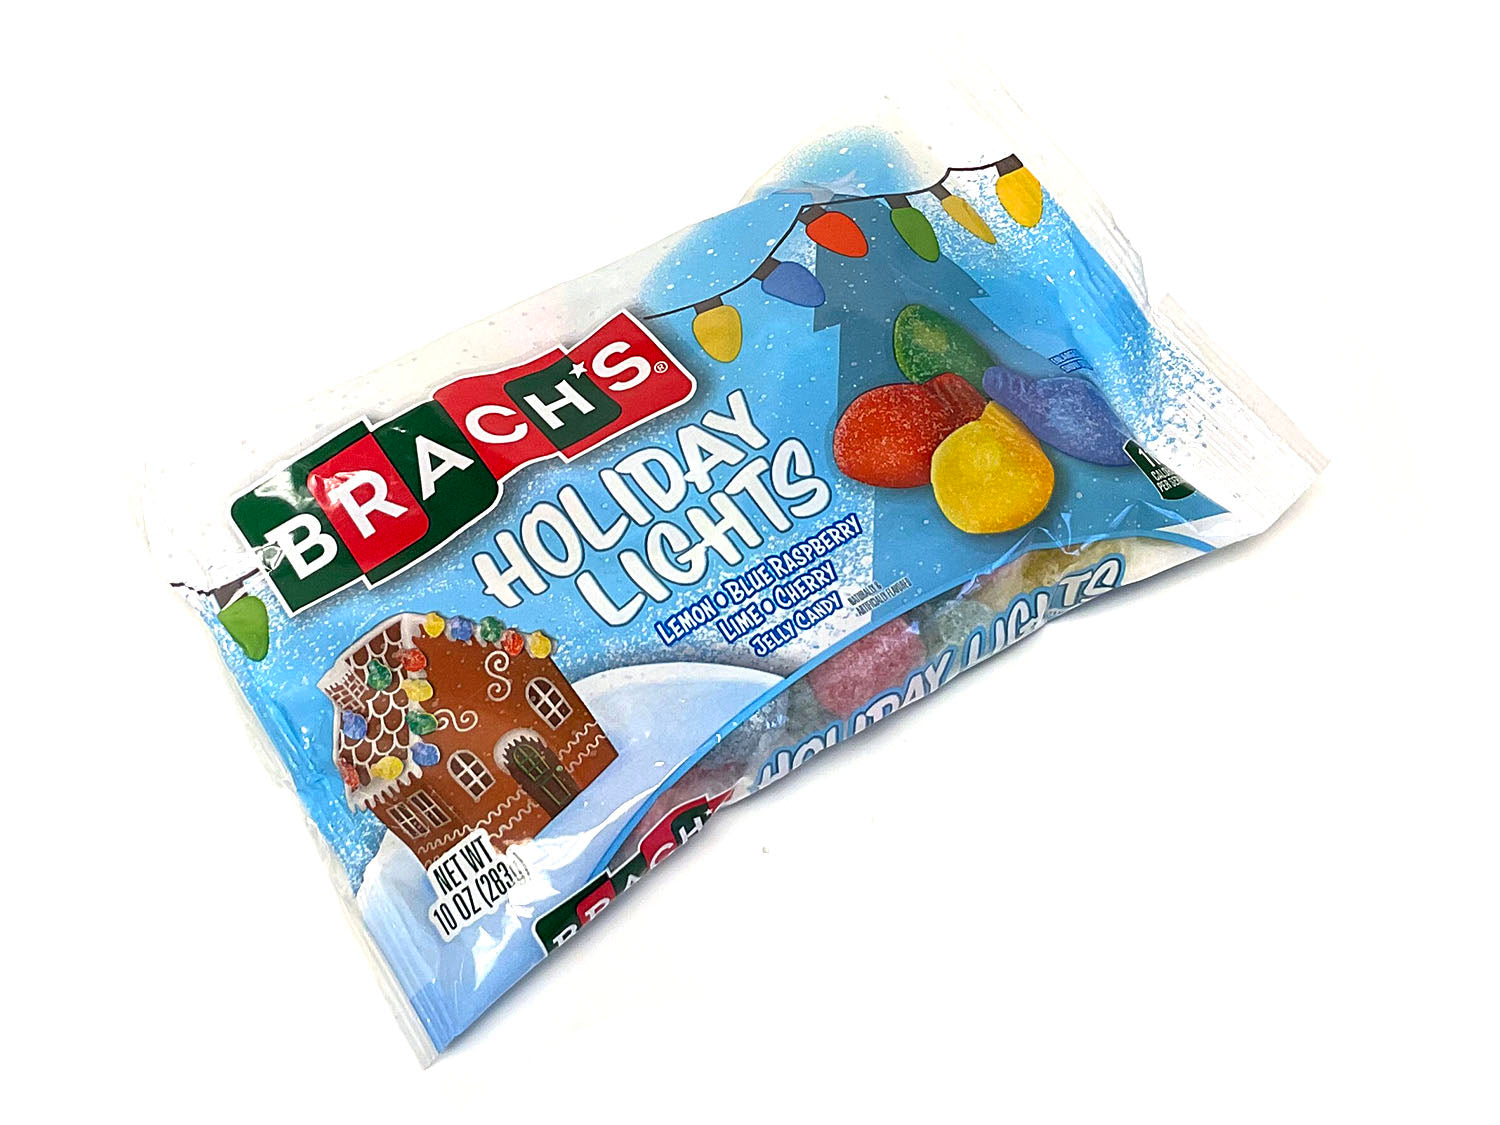 Brach's Holiday Lights - 10 oz bag